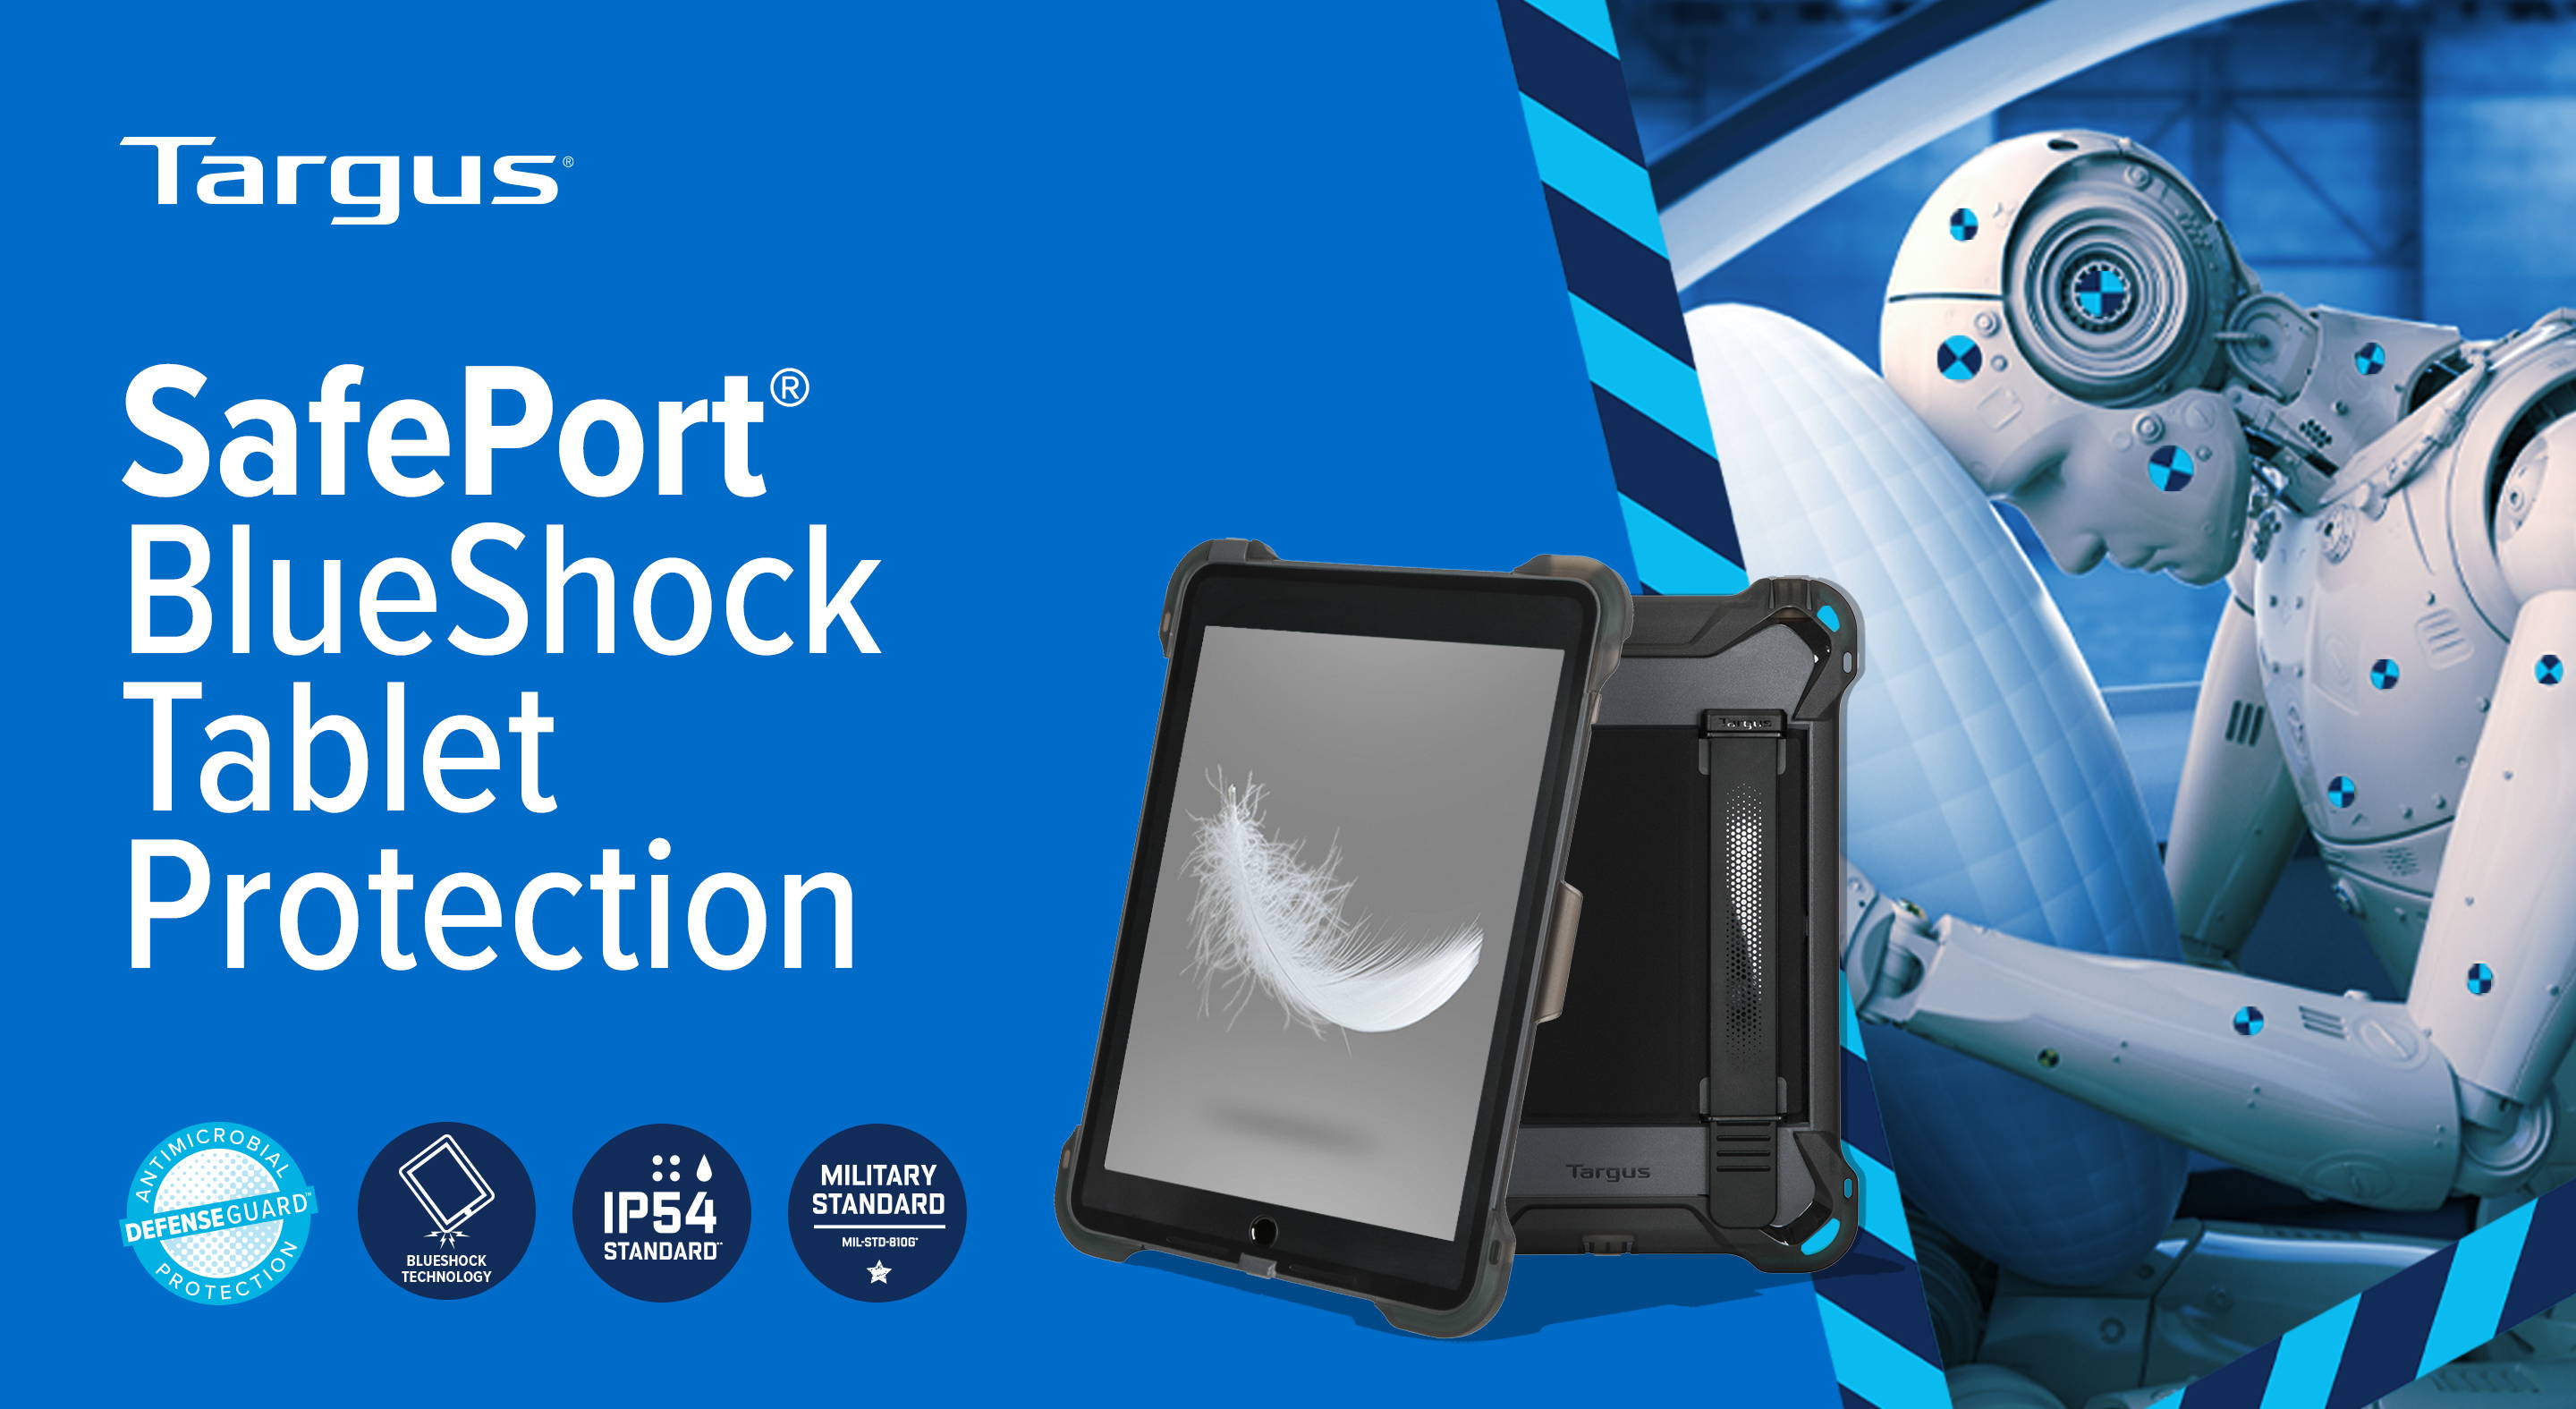 Targus Safeport BlueShock Tablet Protection